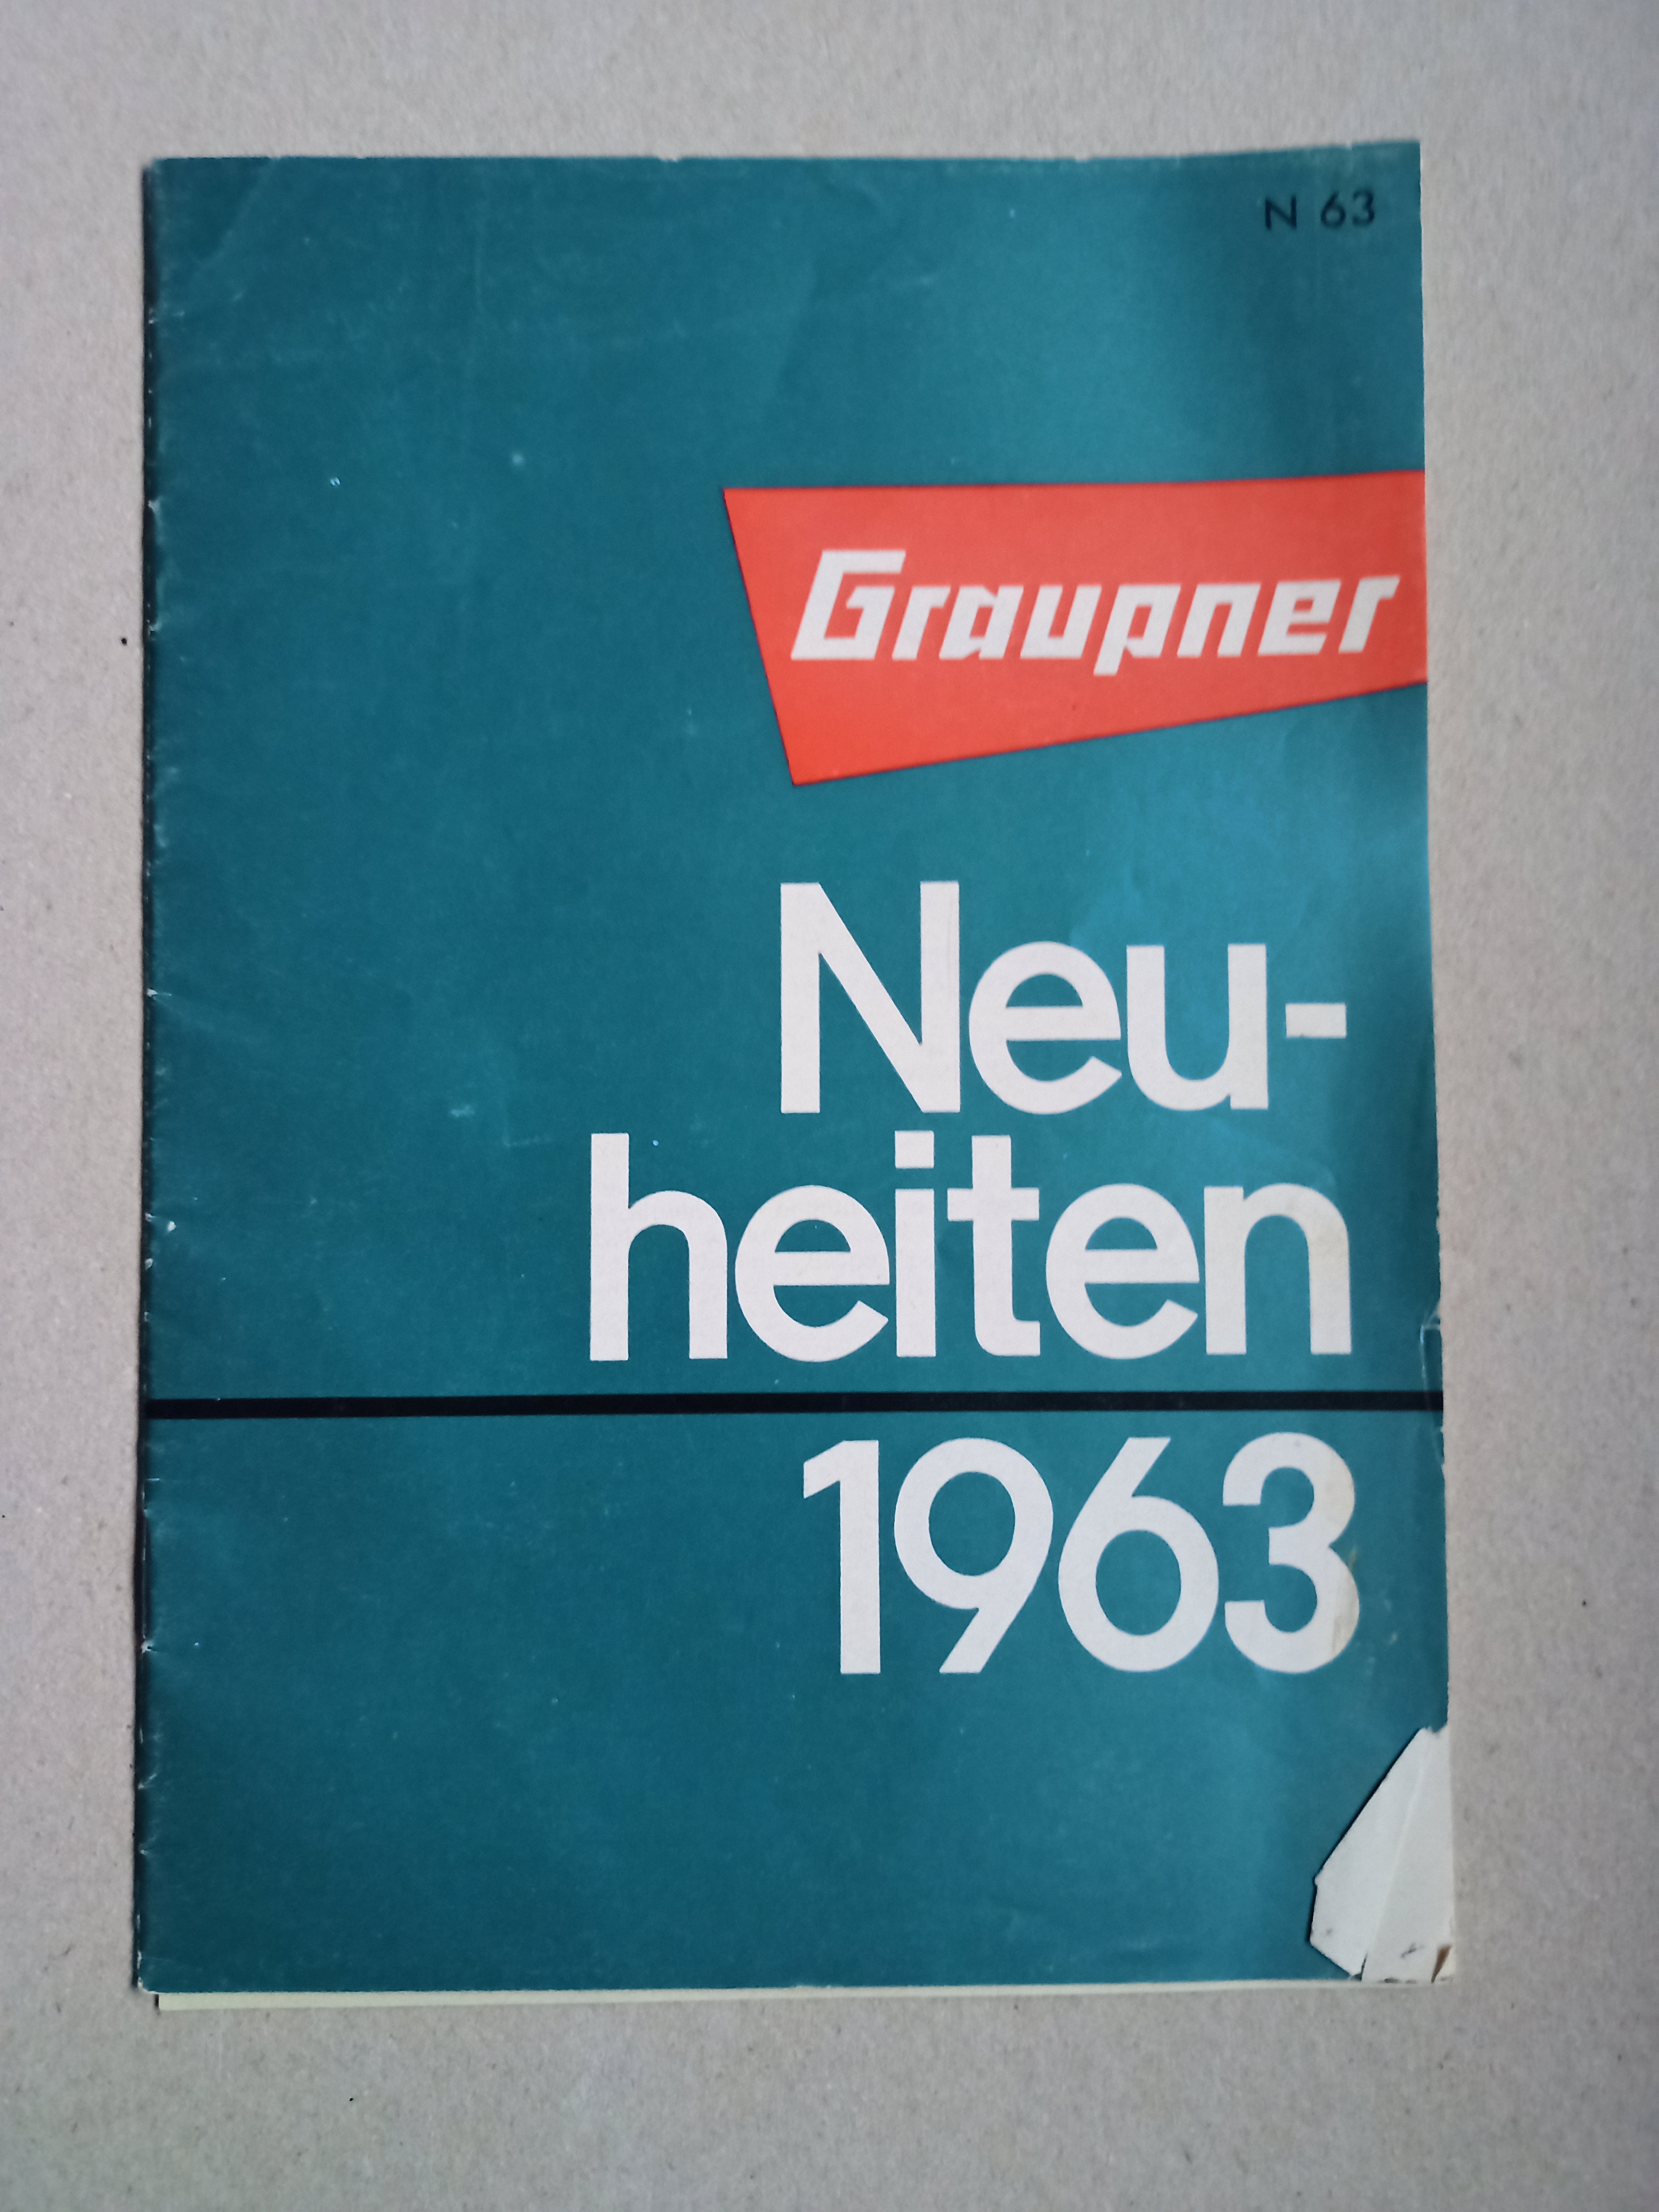 Graupner Neuheiten 1963 (Deutsches Segelflugmuseum mit Modellflug CC BY-NC-SA)